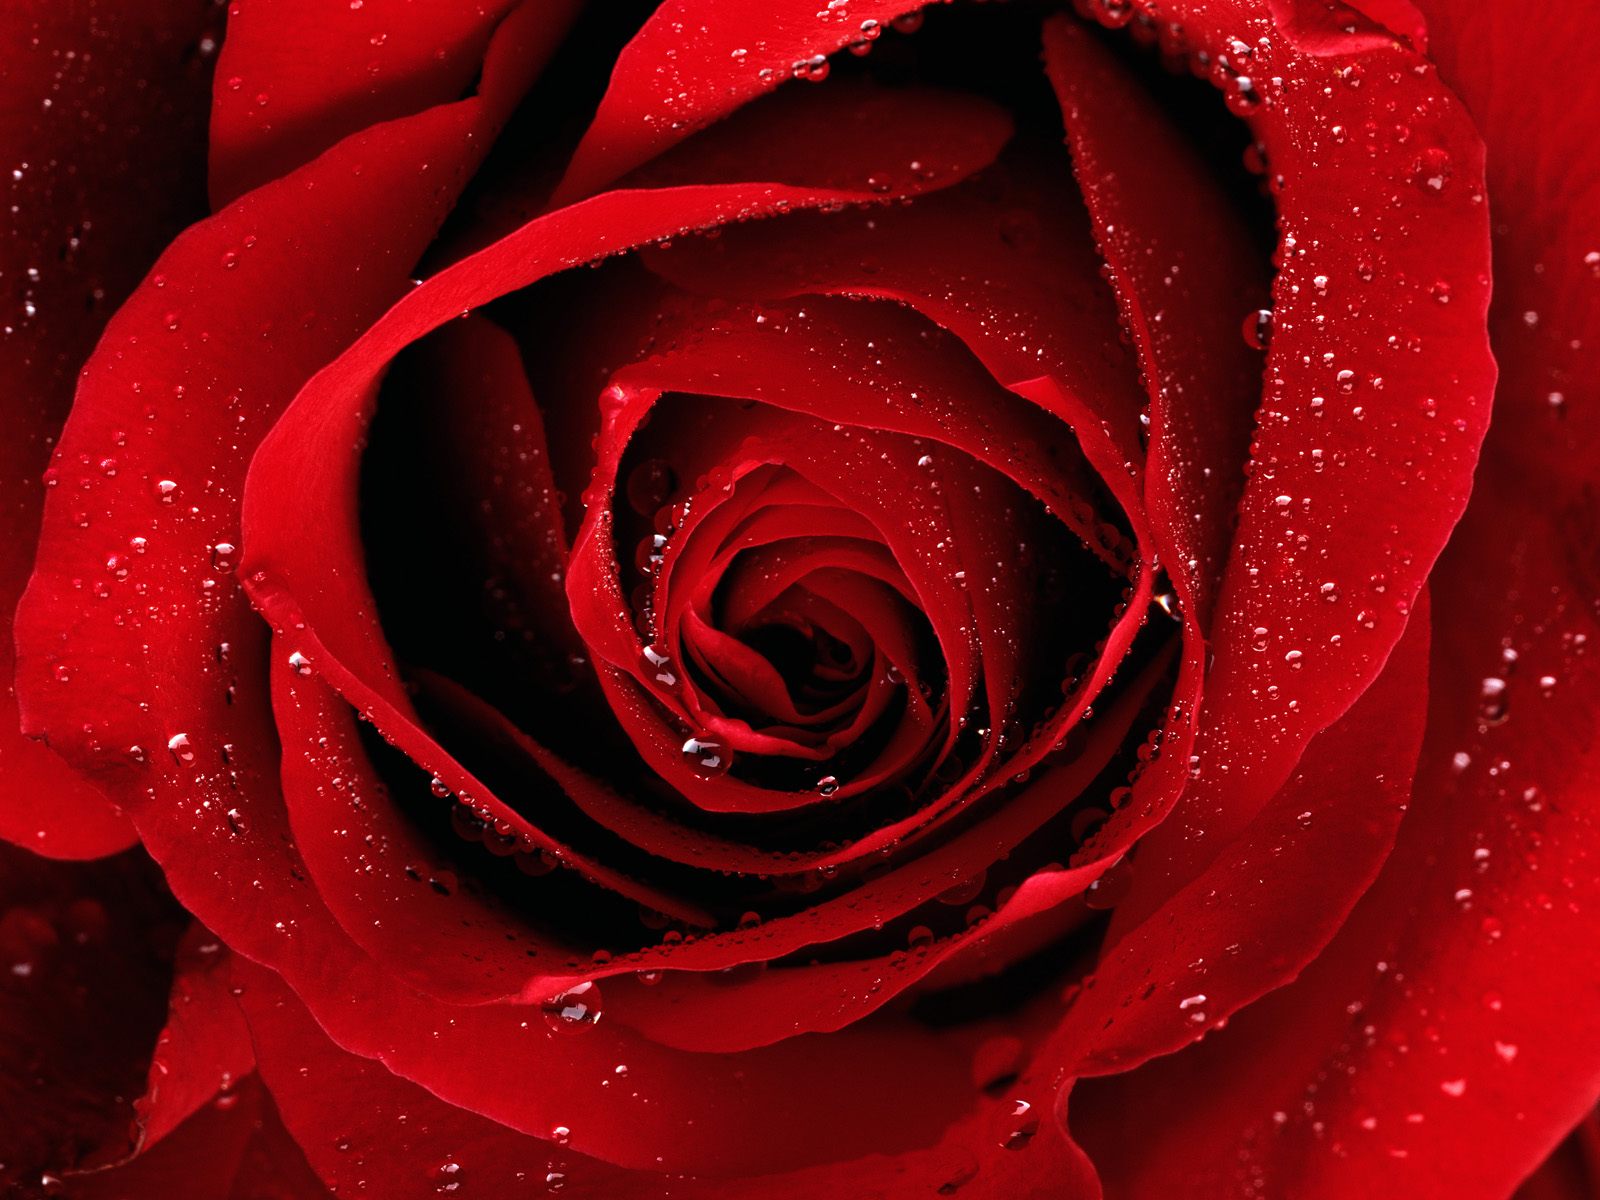 [A_Red_Rose_For_You_nature_flower_HQ_wallpaper_stockwallpapers.blogspot.com.jpg]